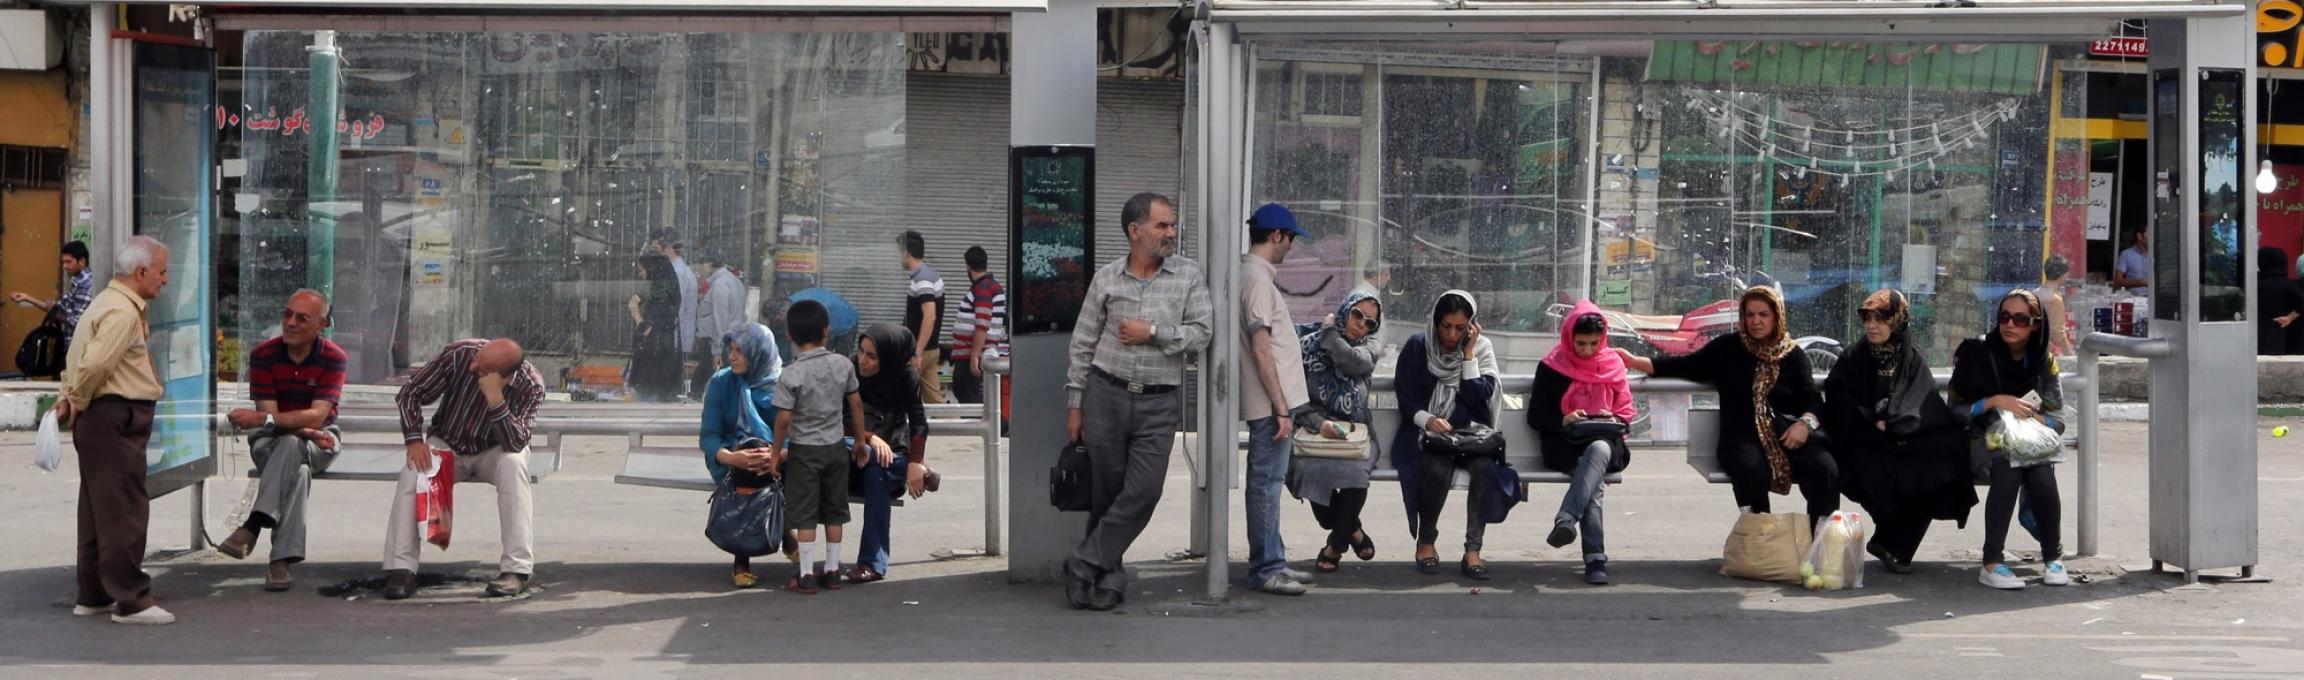 longreads-iran-business-bus-stop